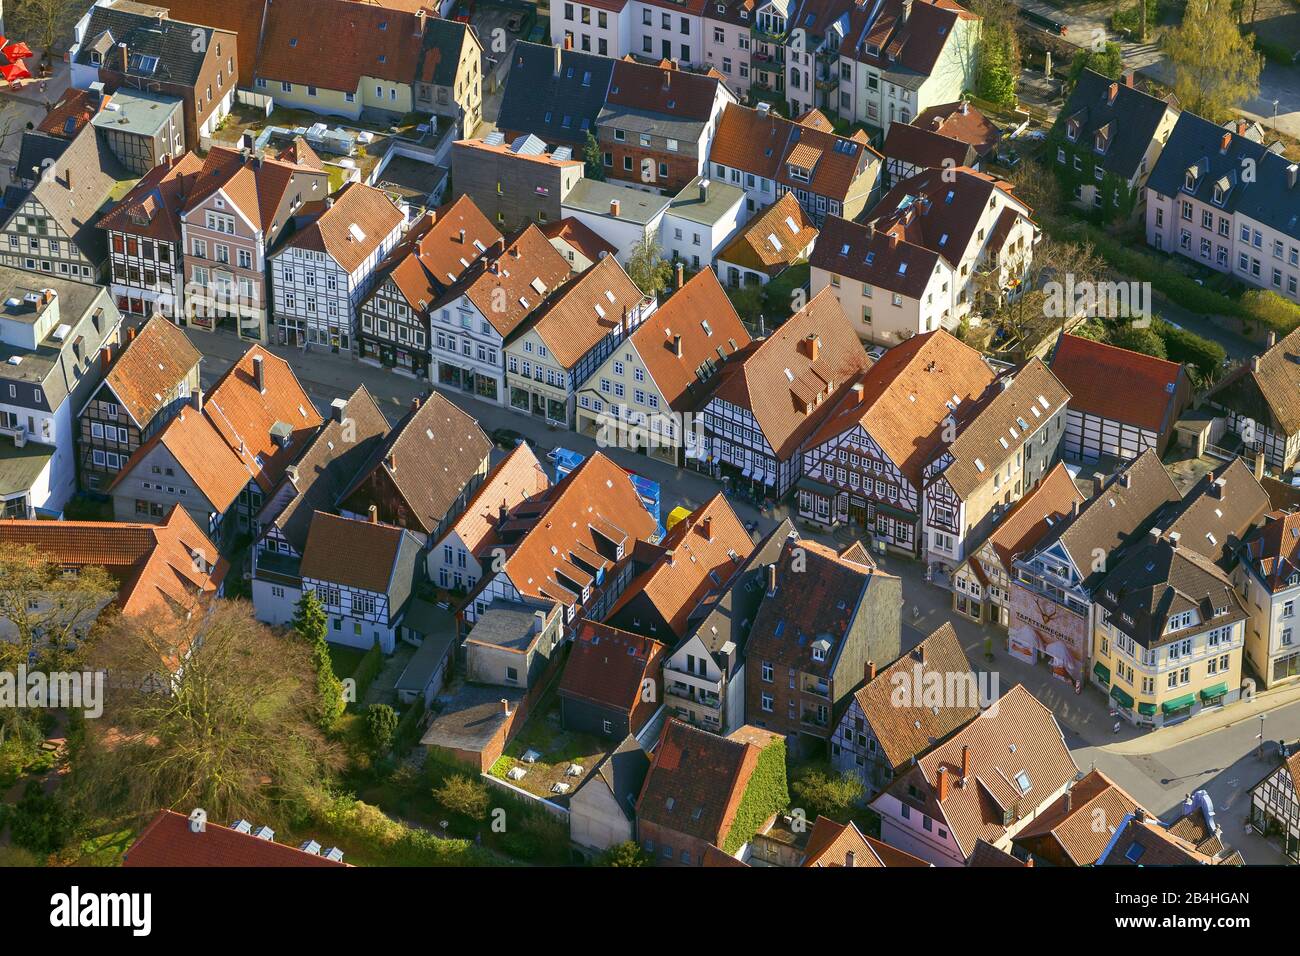 , old city of Detmold with half-timbered houses at Krumme street, 22.04.2013, aerial view, Germany, North Rhine-Westphalia, East Westphalia, Detmold Stock Photo